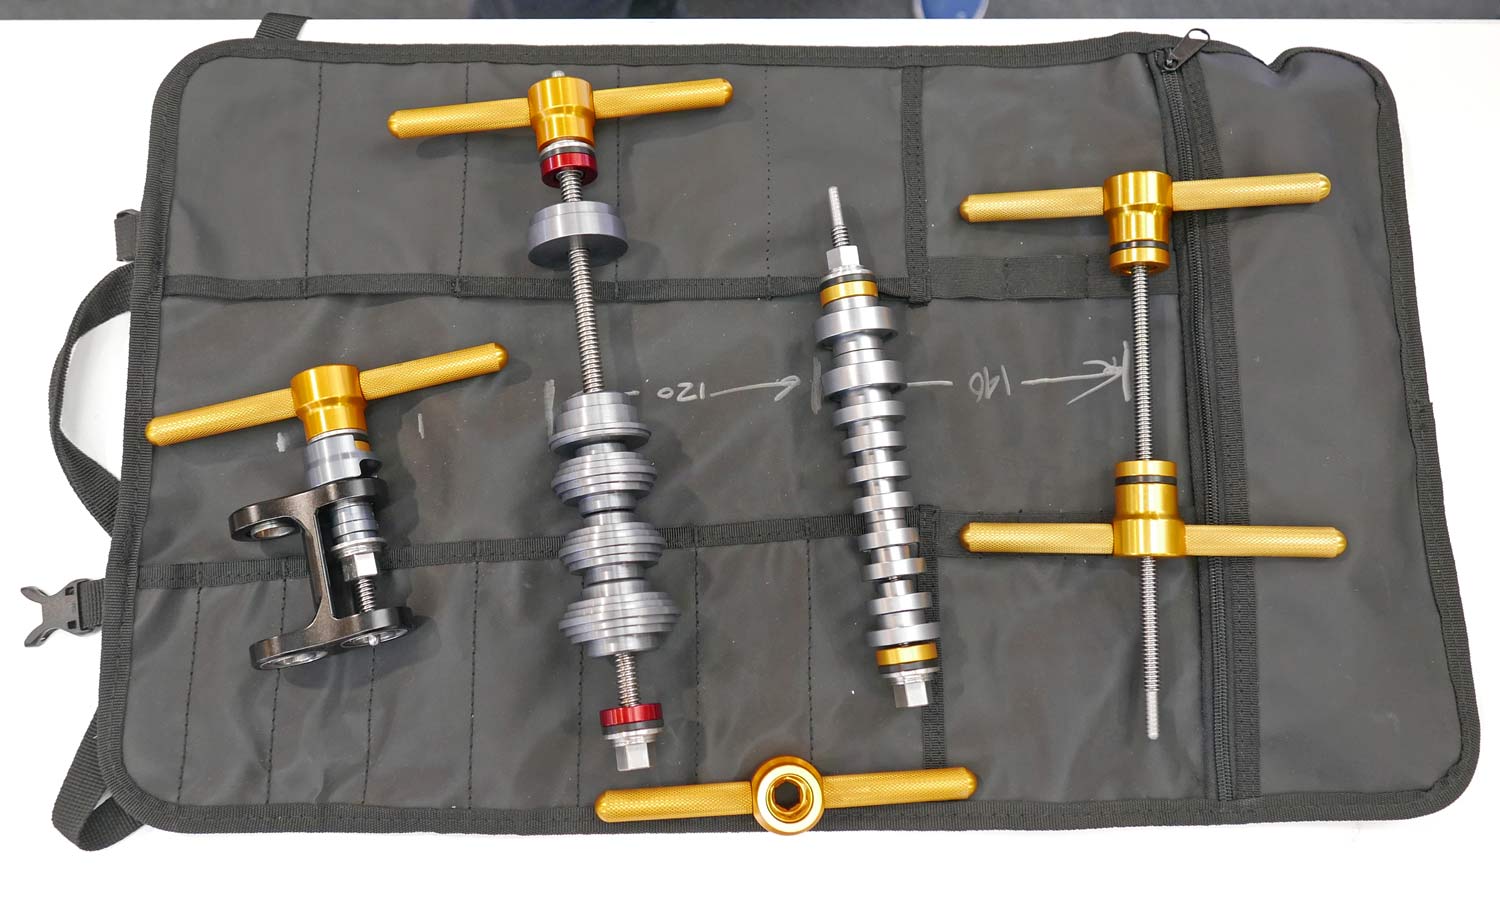 Enduro Bearings Multi Press multi-purpose modular bearing press kit: more sizes, refined adapters